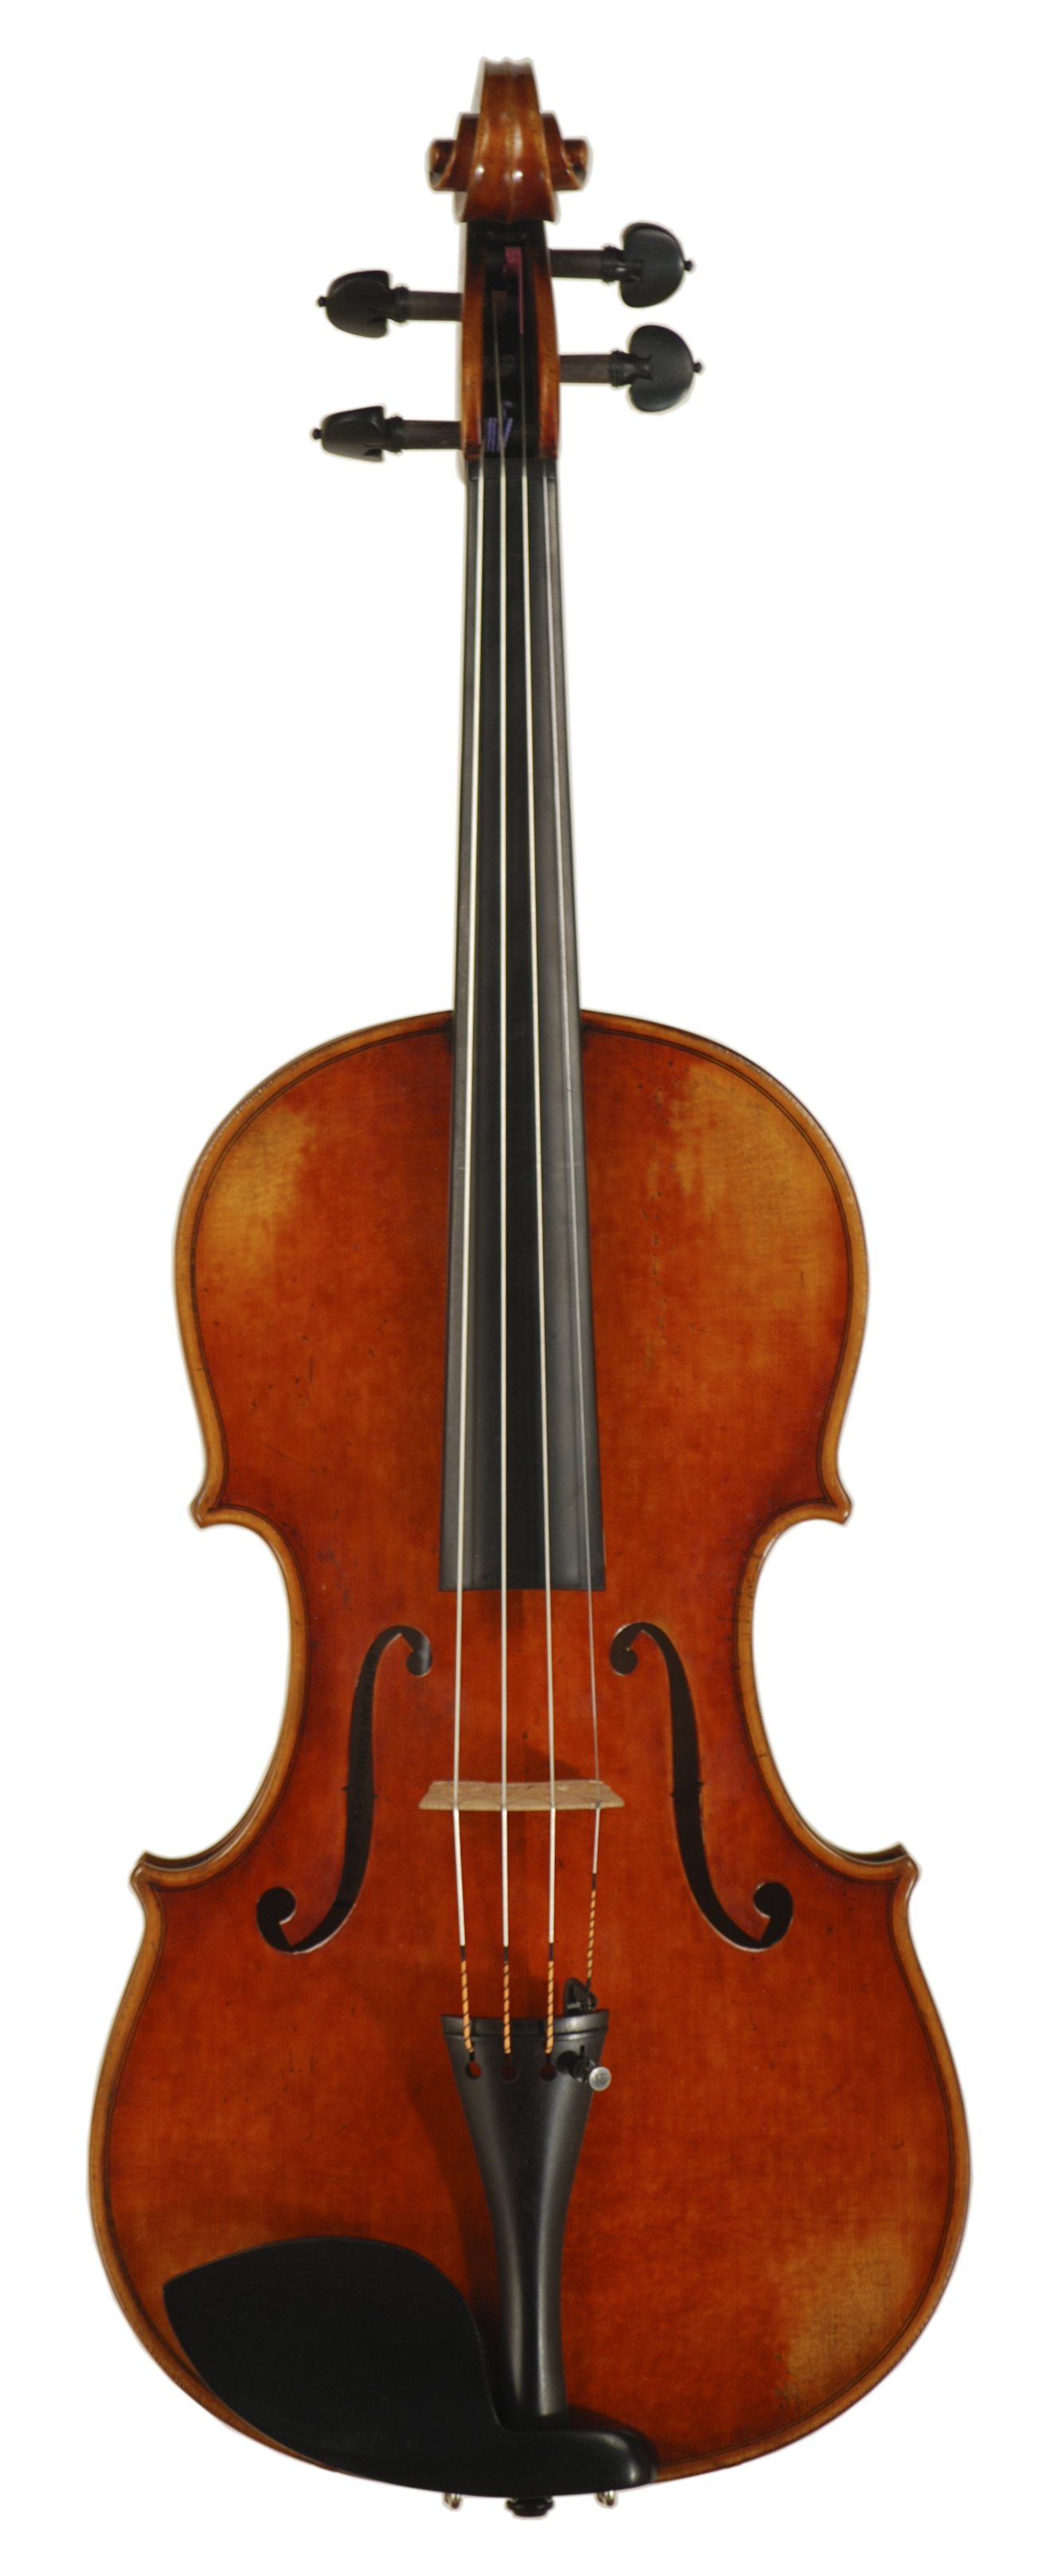 Resina Para Violín Viola Cello Leto - Yemin